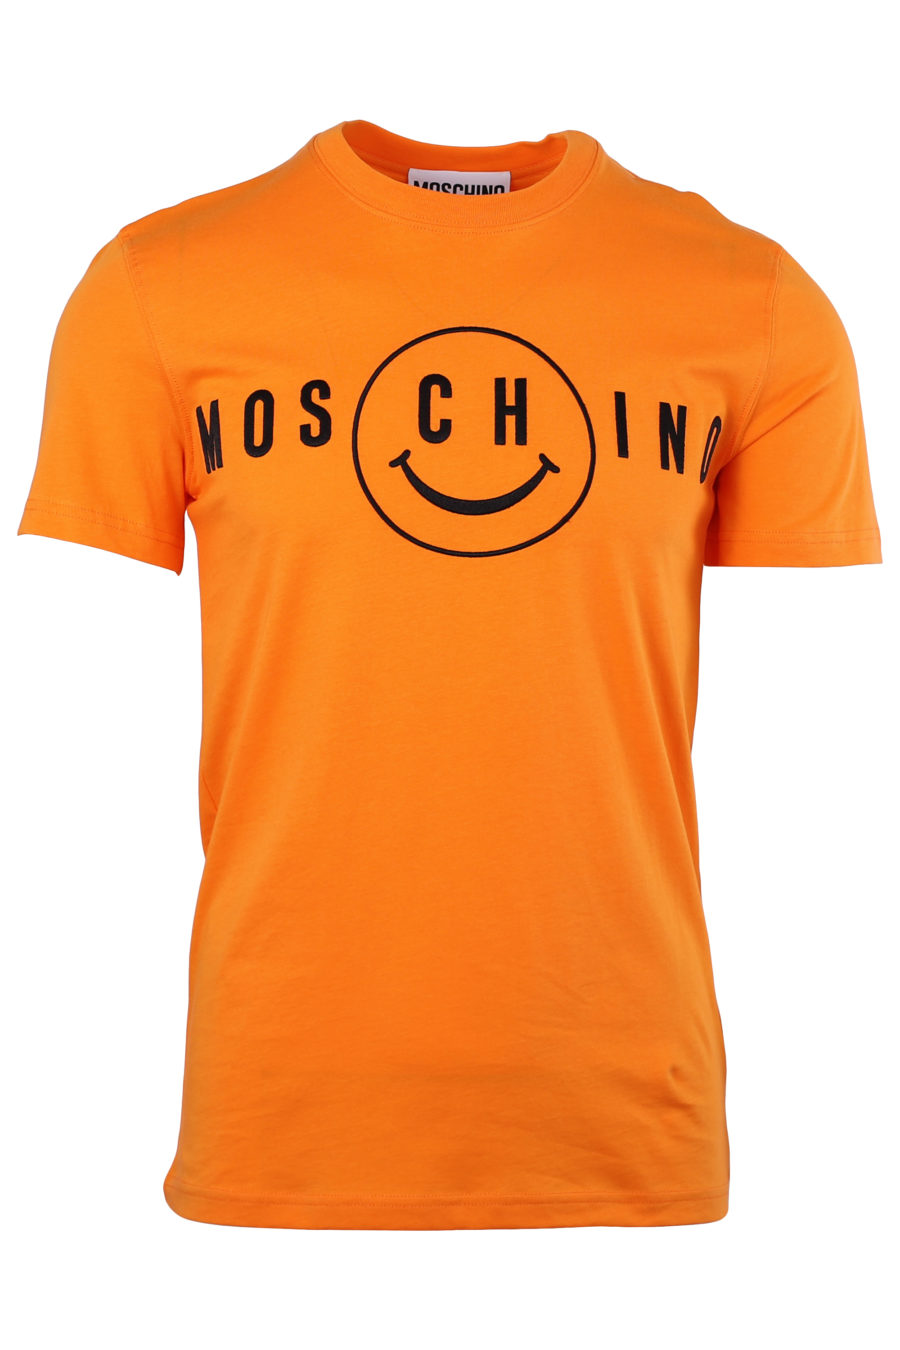 Camiseta naranja "Smiley" con logo bordado - IMG 9981